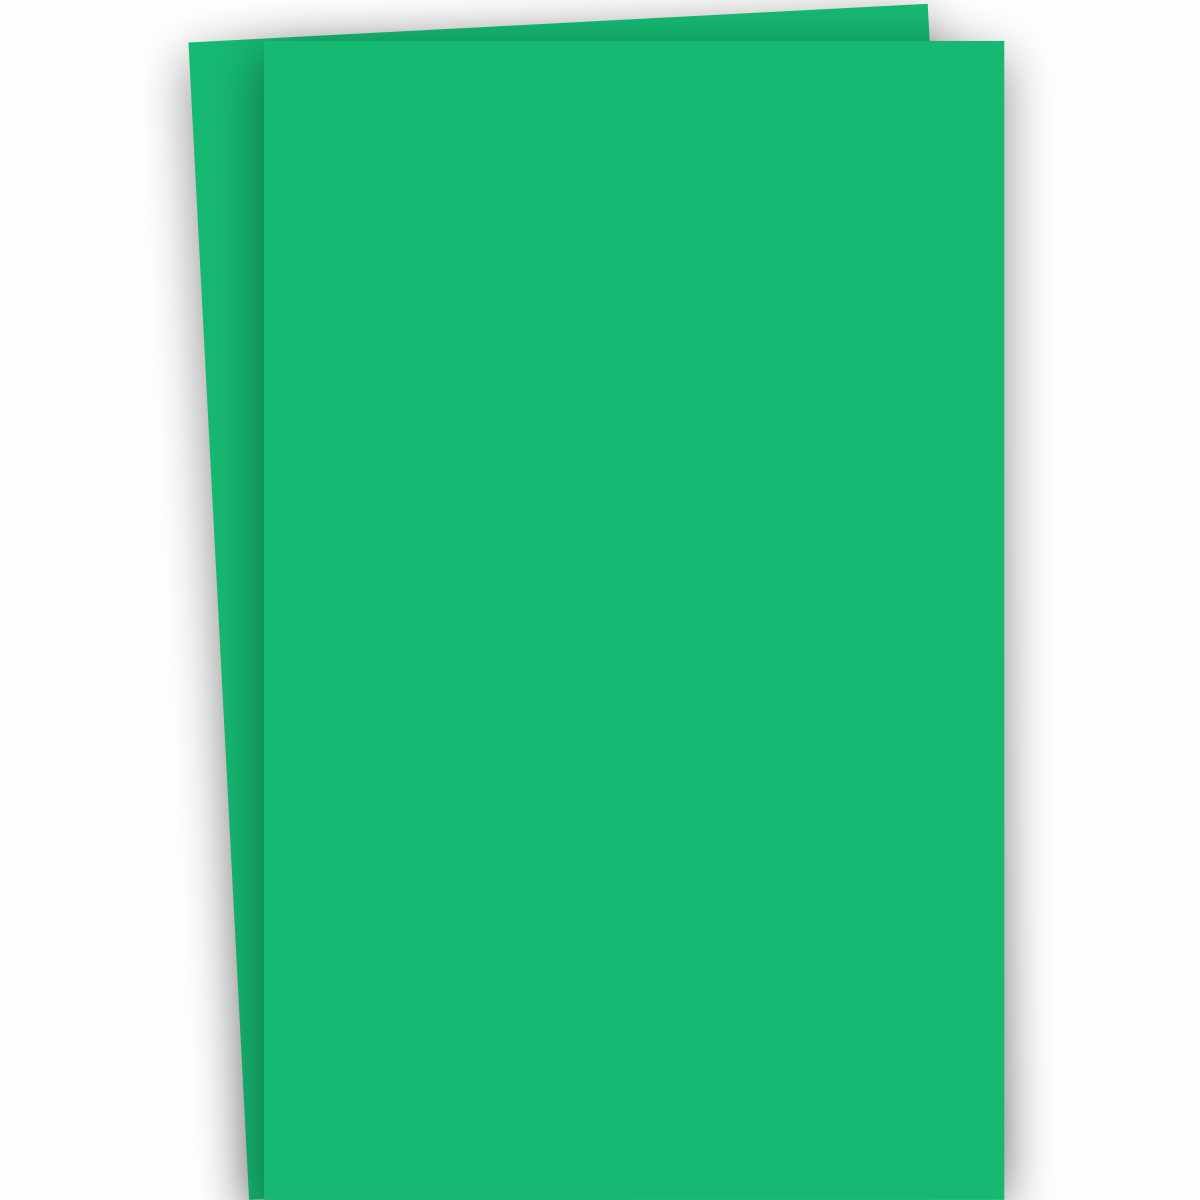 Burano SKY BLUE (08) - 8.5x11 Lightweight Cardstock Paper - 52lb